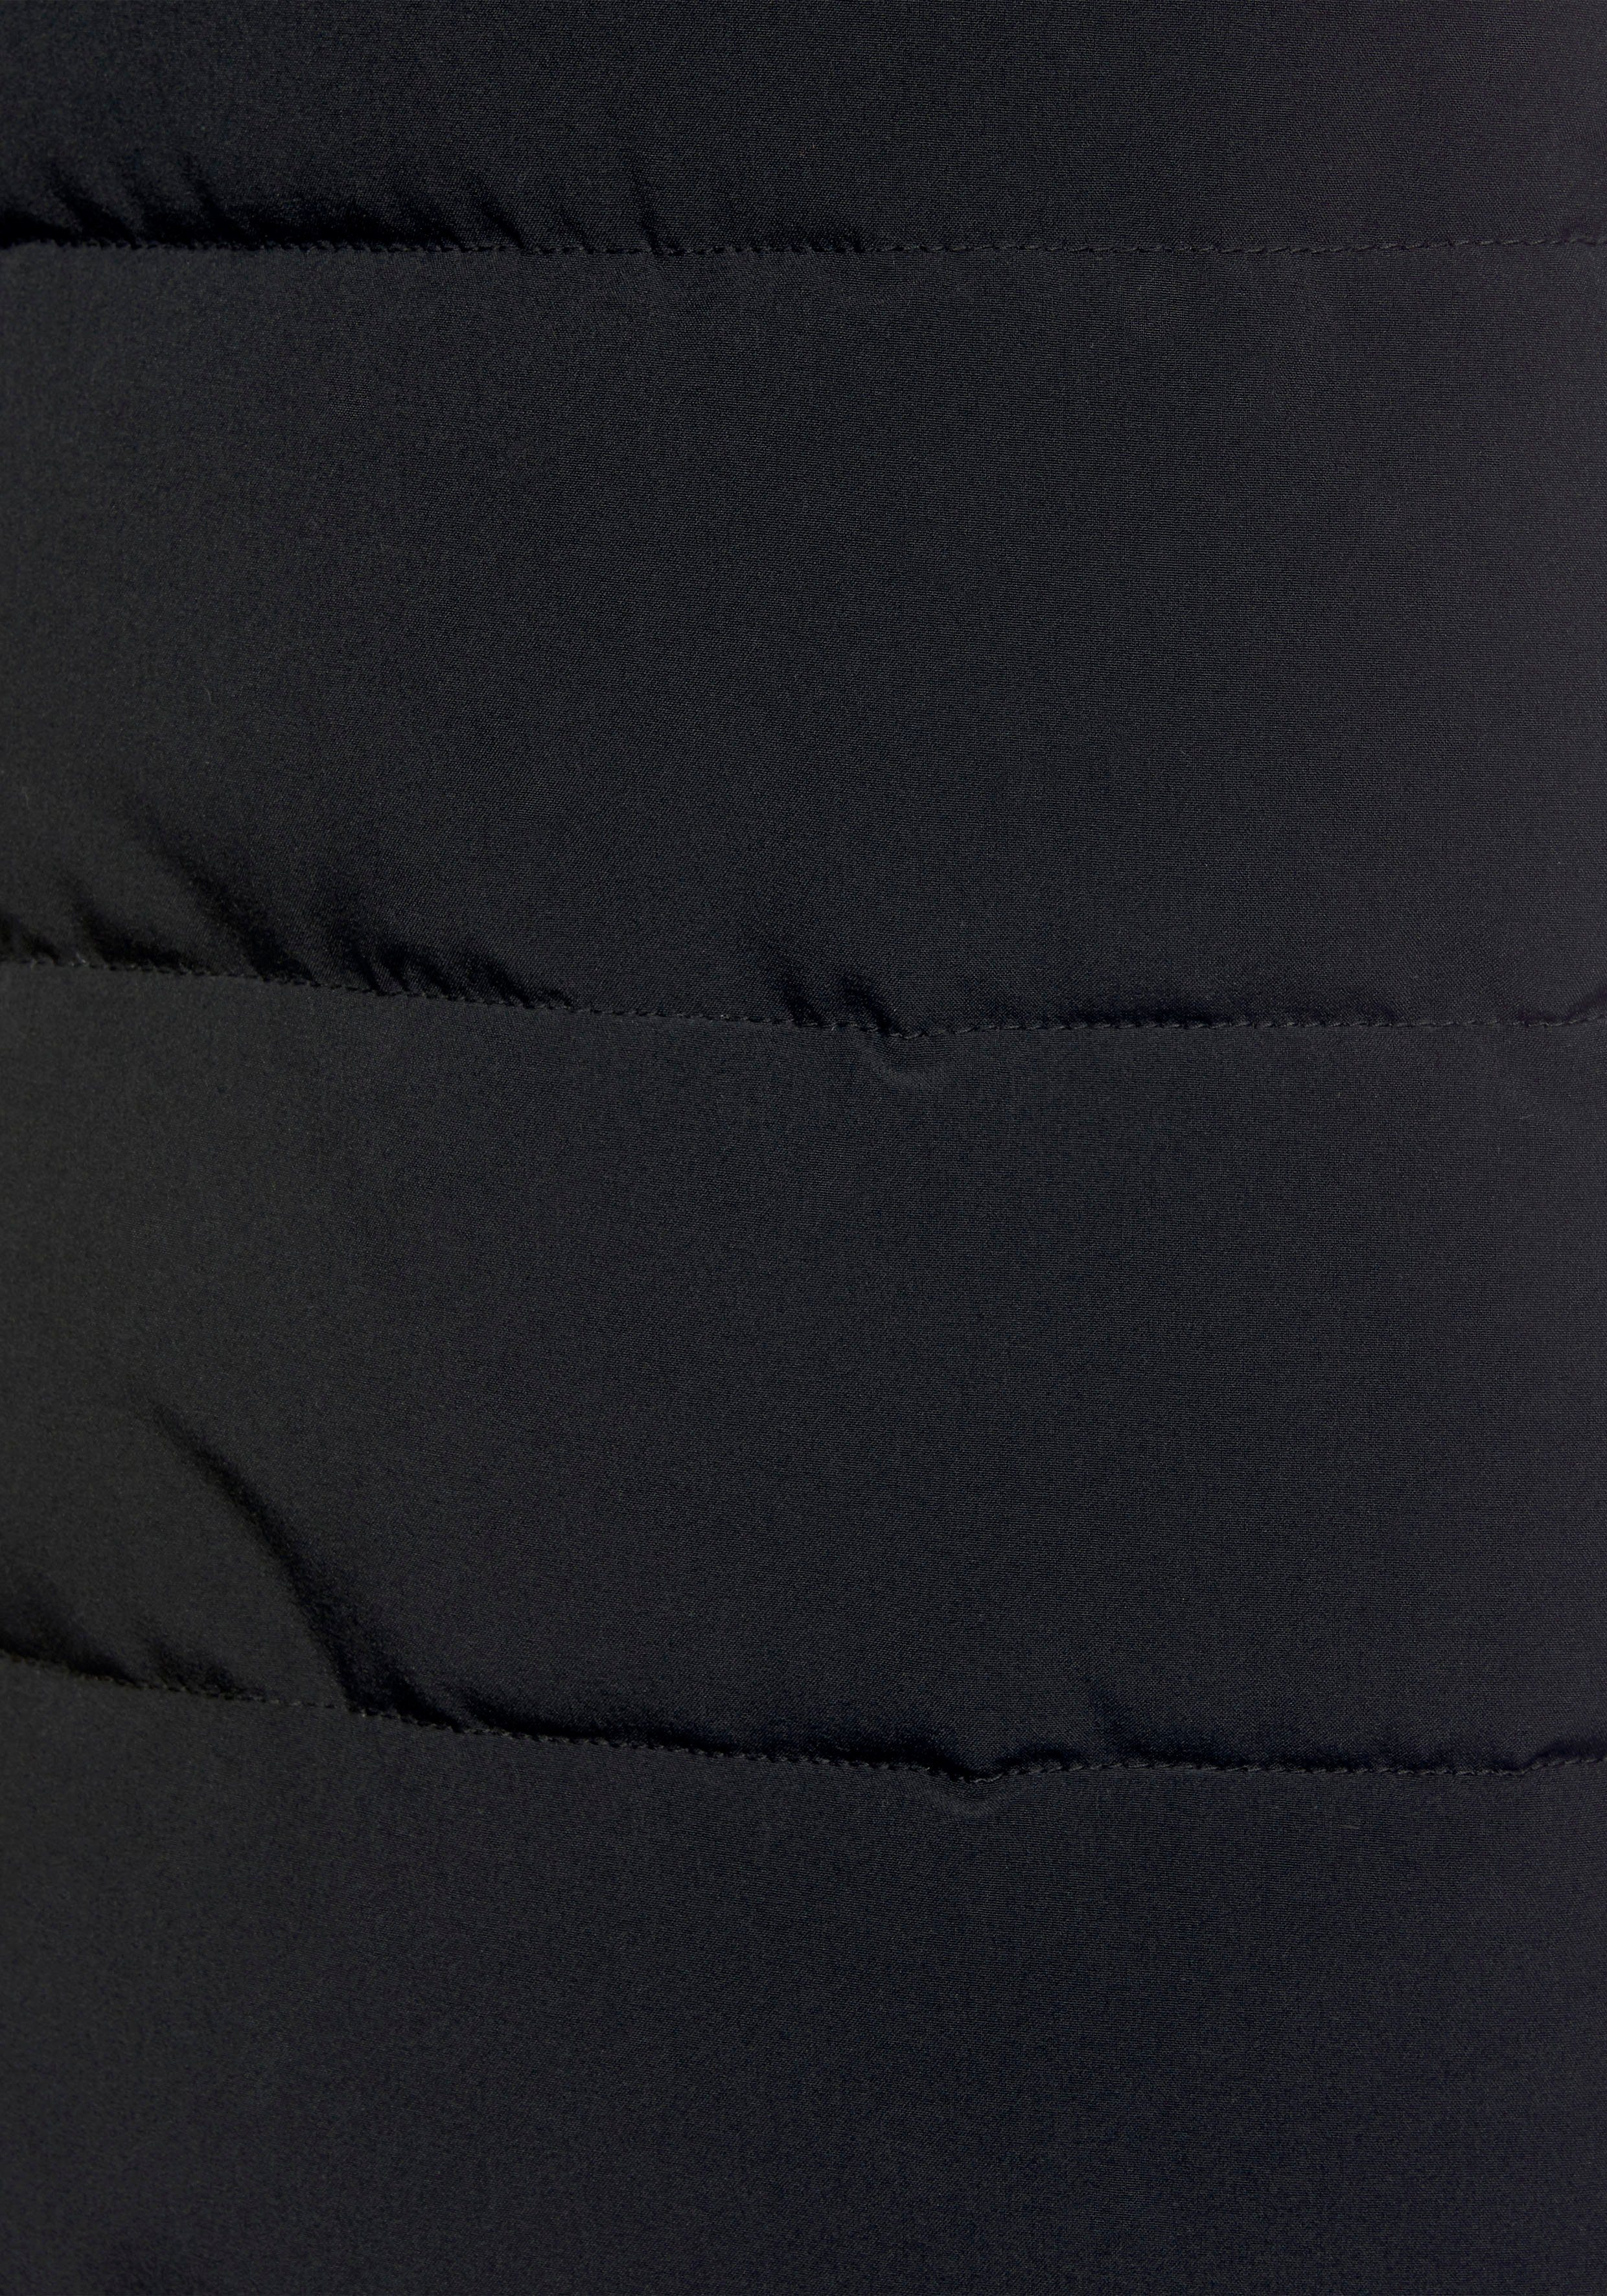 dem & black ALPENBLITZ Steppmantel abnehmbarer Gürtel nachhaltigem Markenprägung (Jacke mit Mantel Material) aus Kuschel-Kapuze auf Oslo long